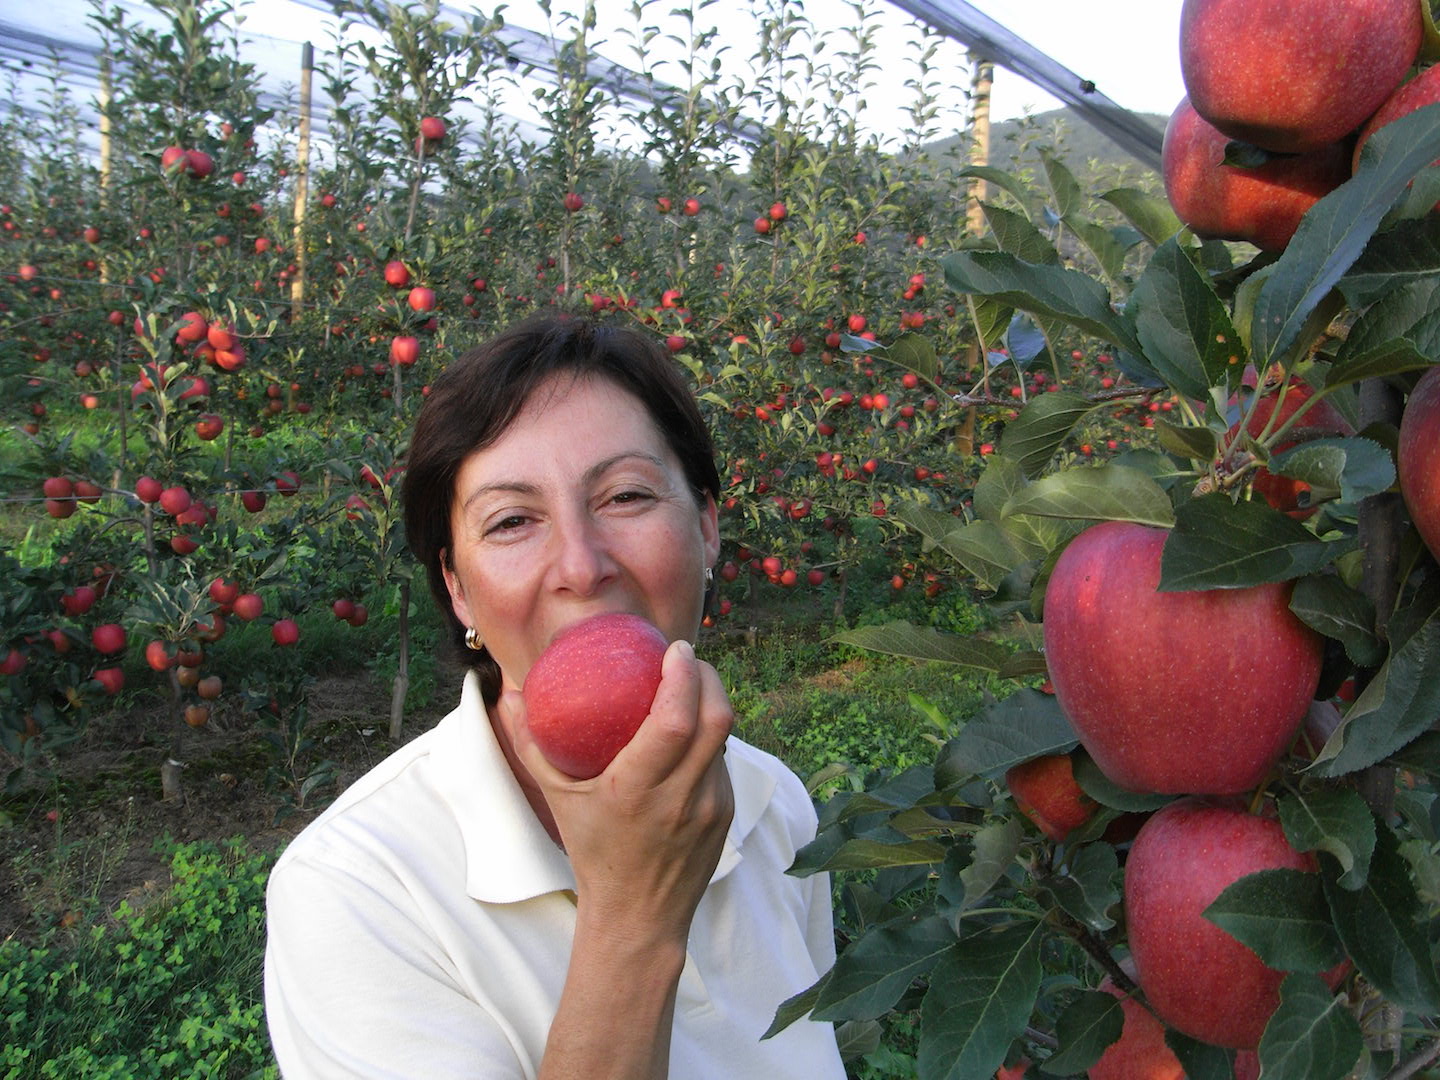 Obstbau Knaller Elisabeth beißt in Apfel